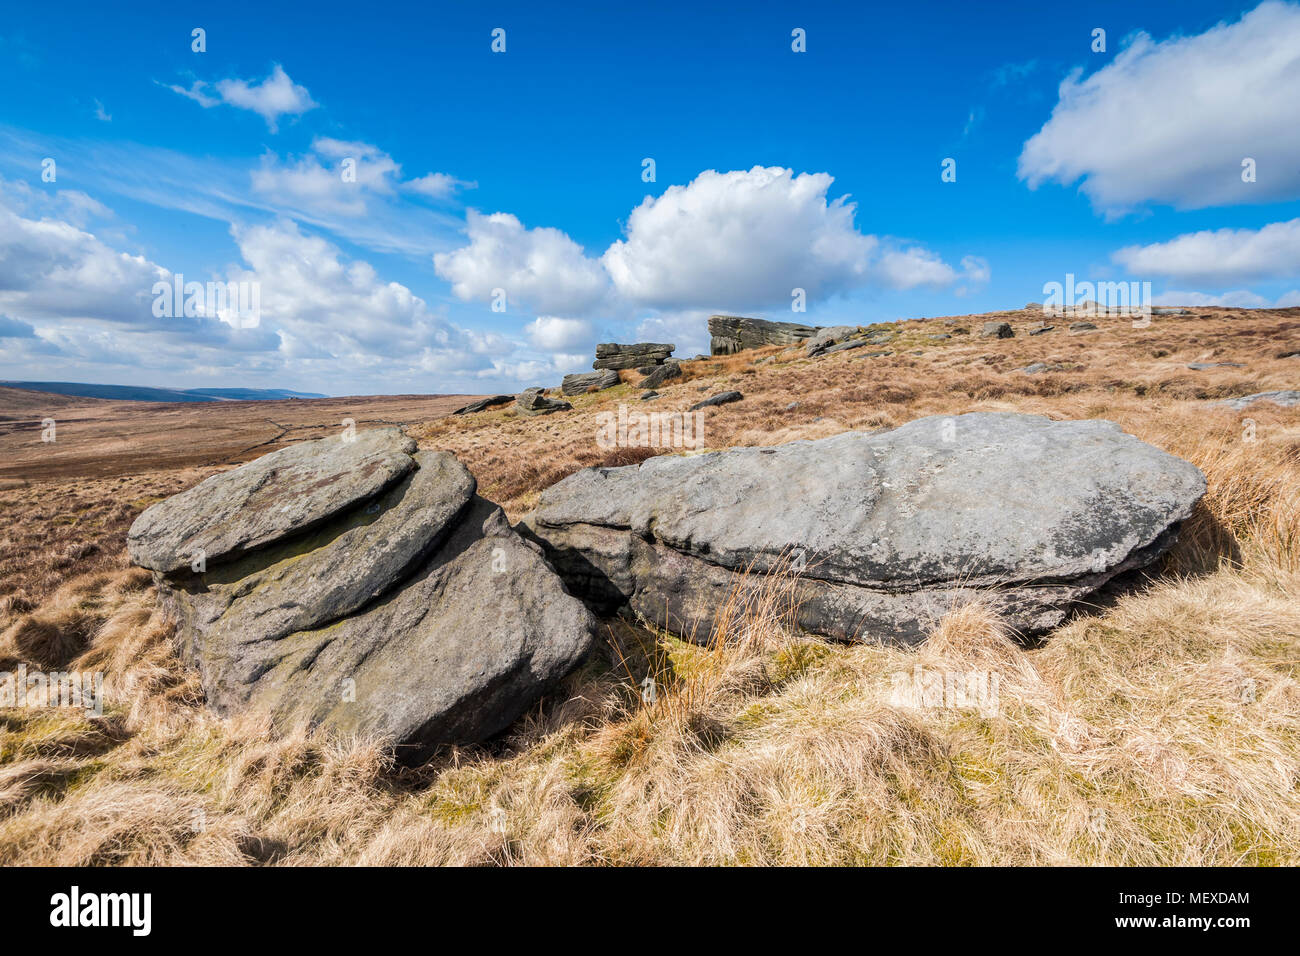 Broken millstone grit boulders scattered on Yorkshire moorland Stock Photo